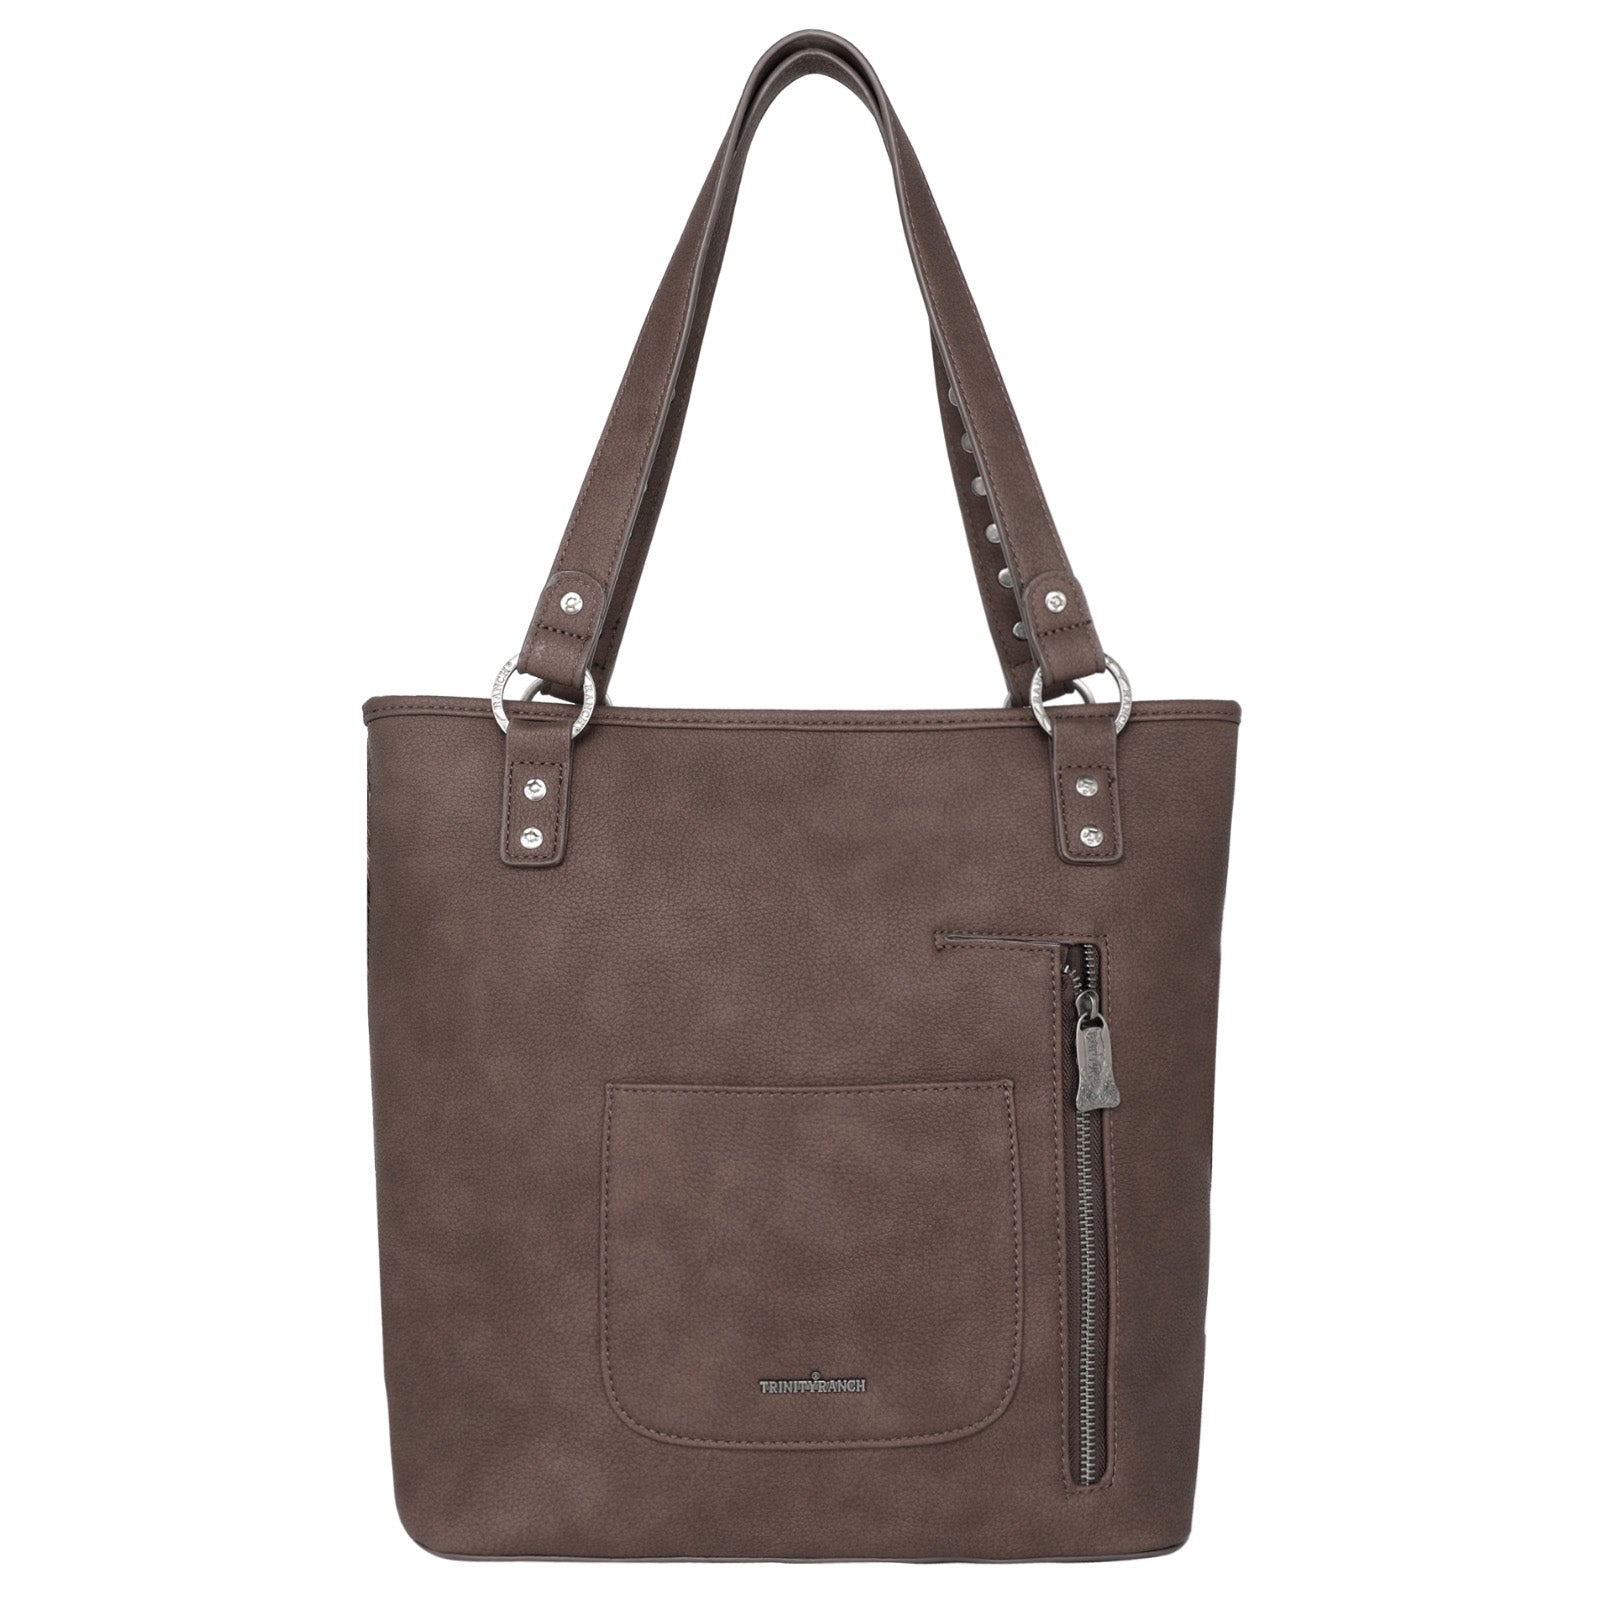 Trinity Ranch purse | Purses, Ranch bag, Bags